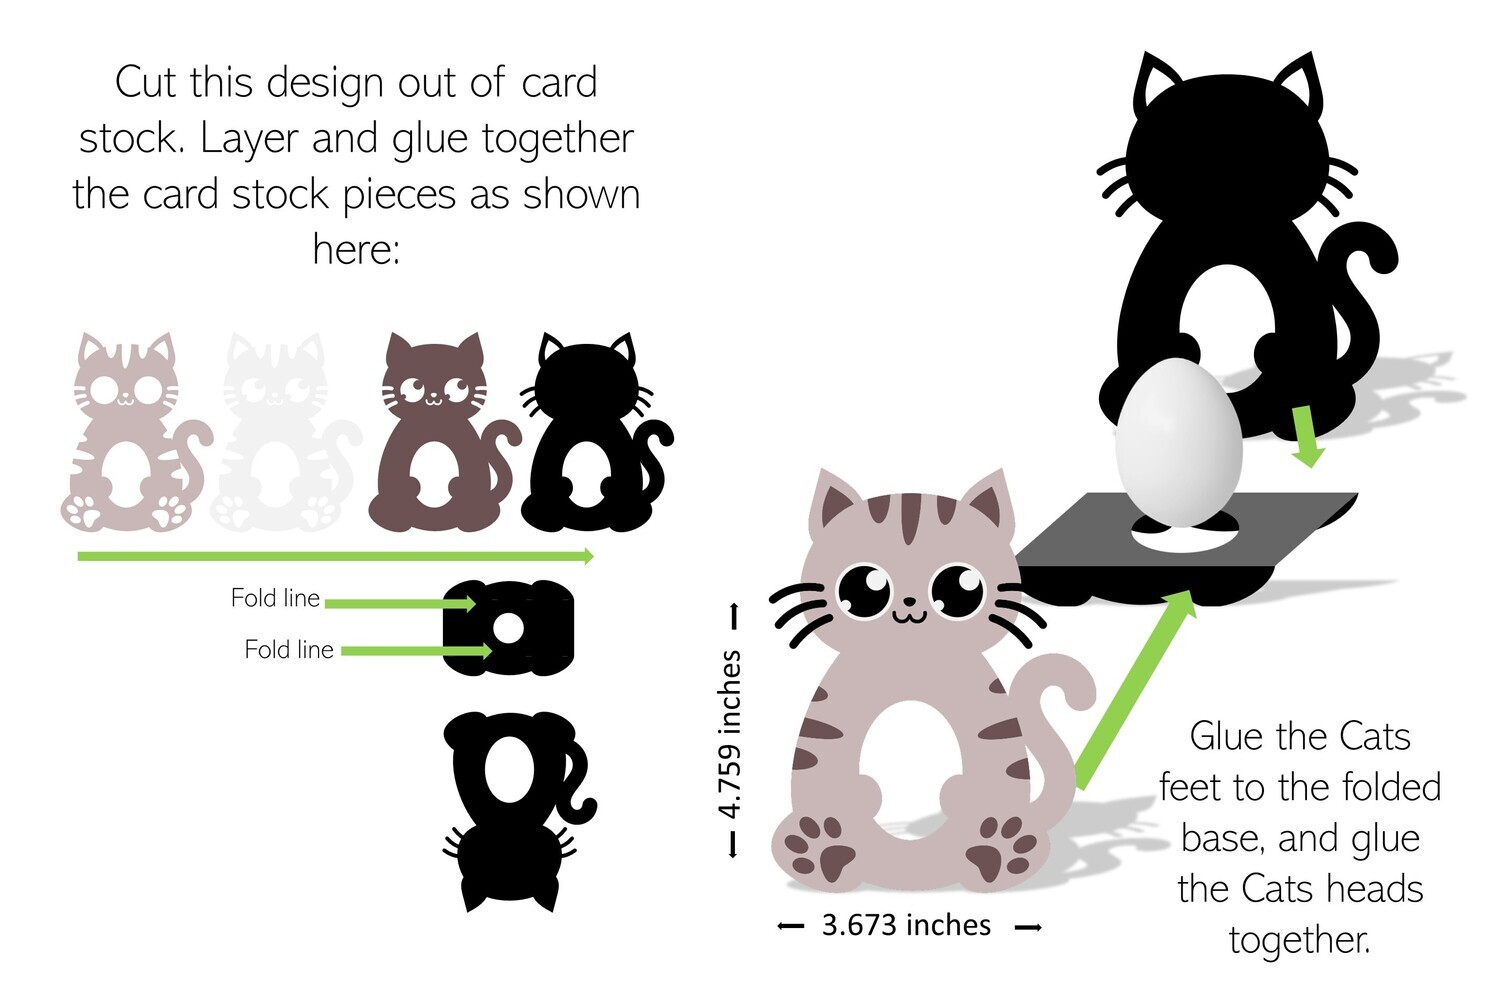 Rabbit, Lamb, Penguin and Duck egg holder designs. By Digital Gems